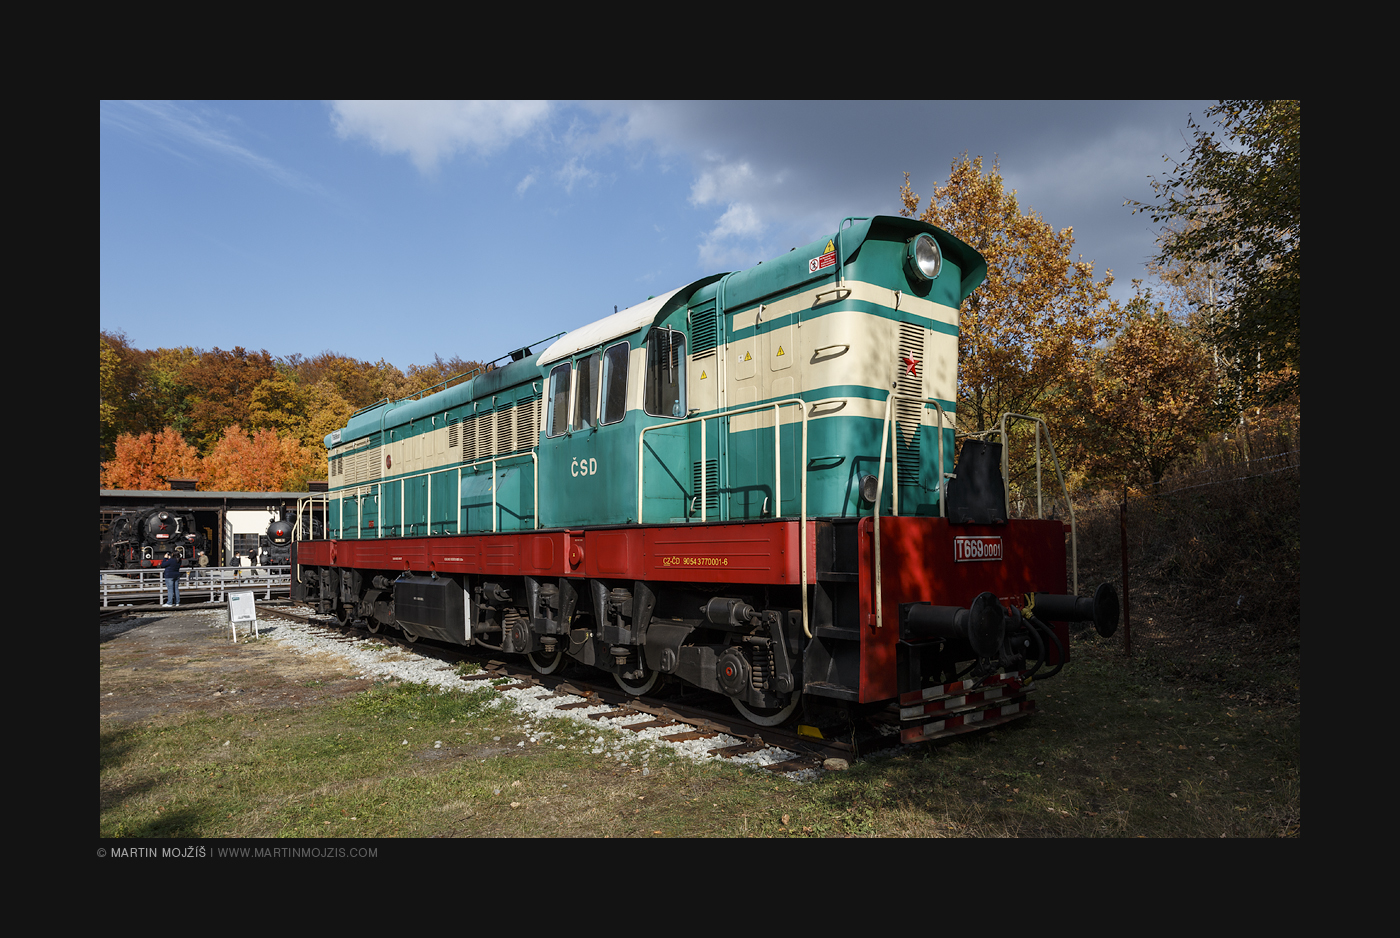 The locomotive T 669.0001.